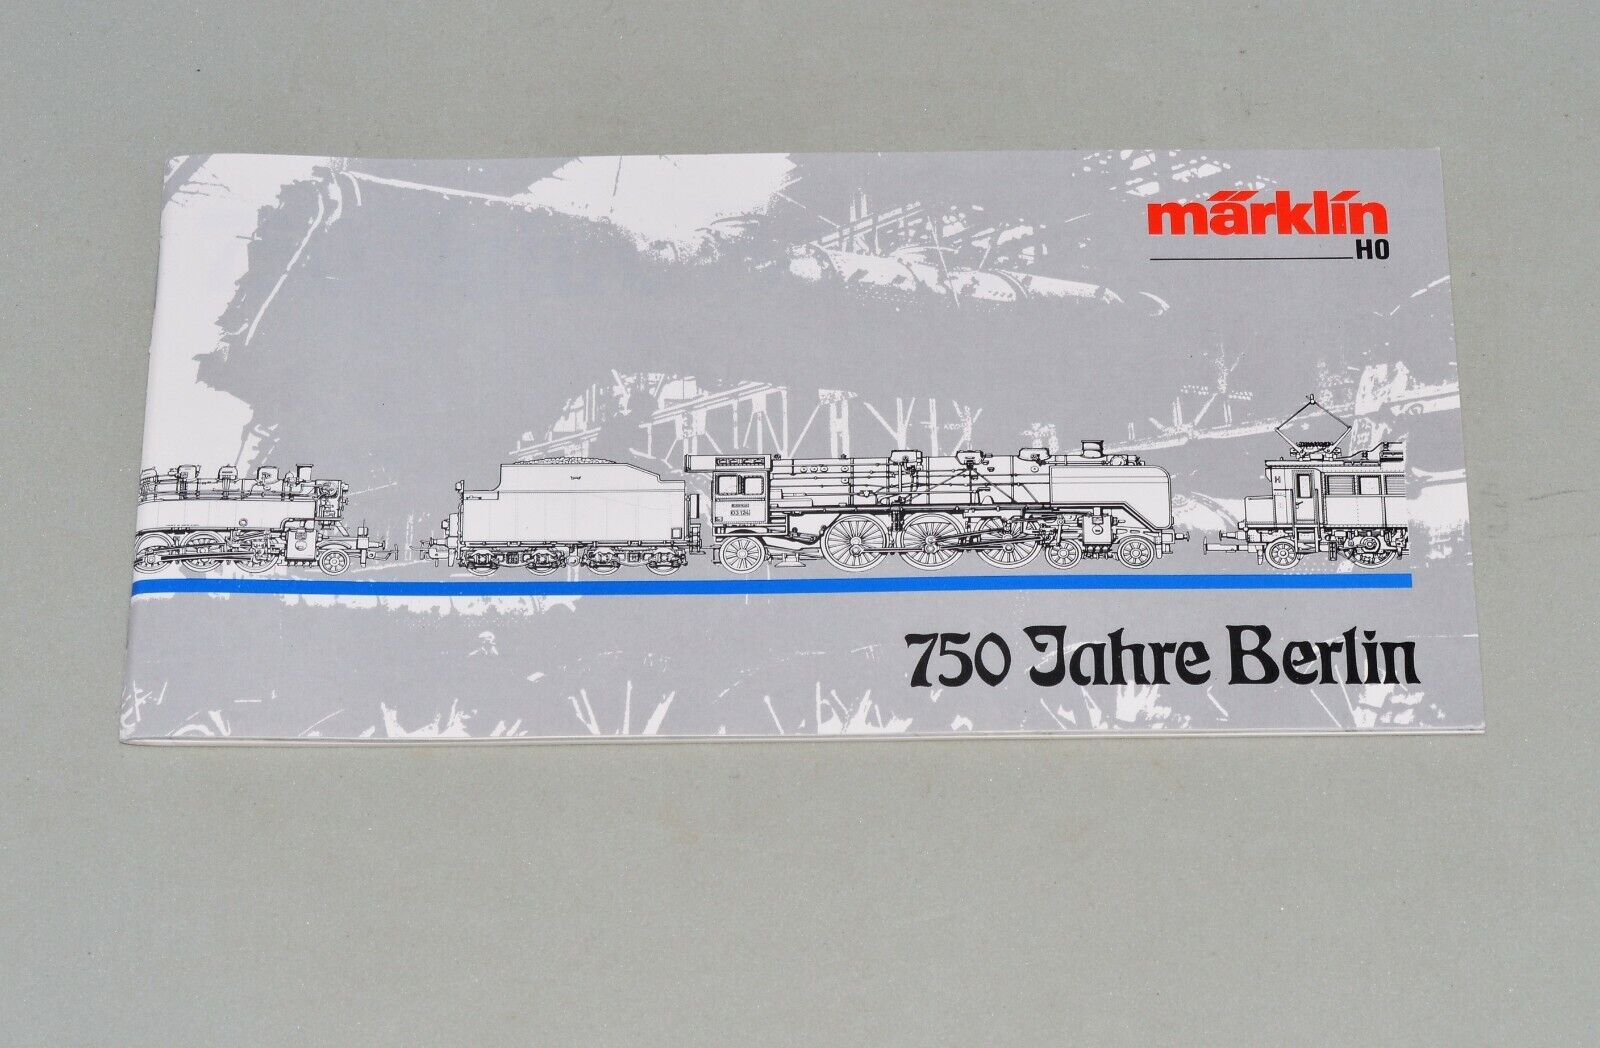 Marklin HO Scale 750 Jahre Berlin Catalogue